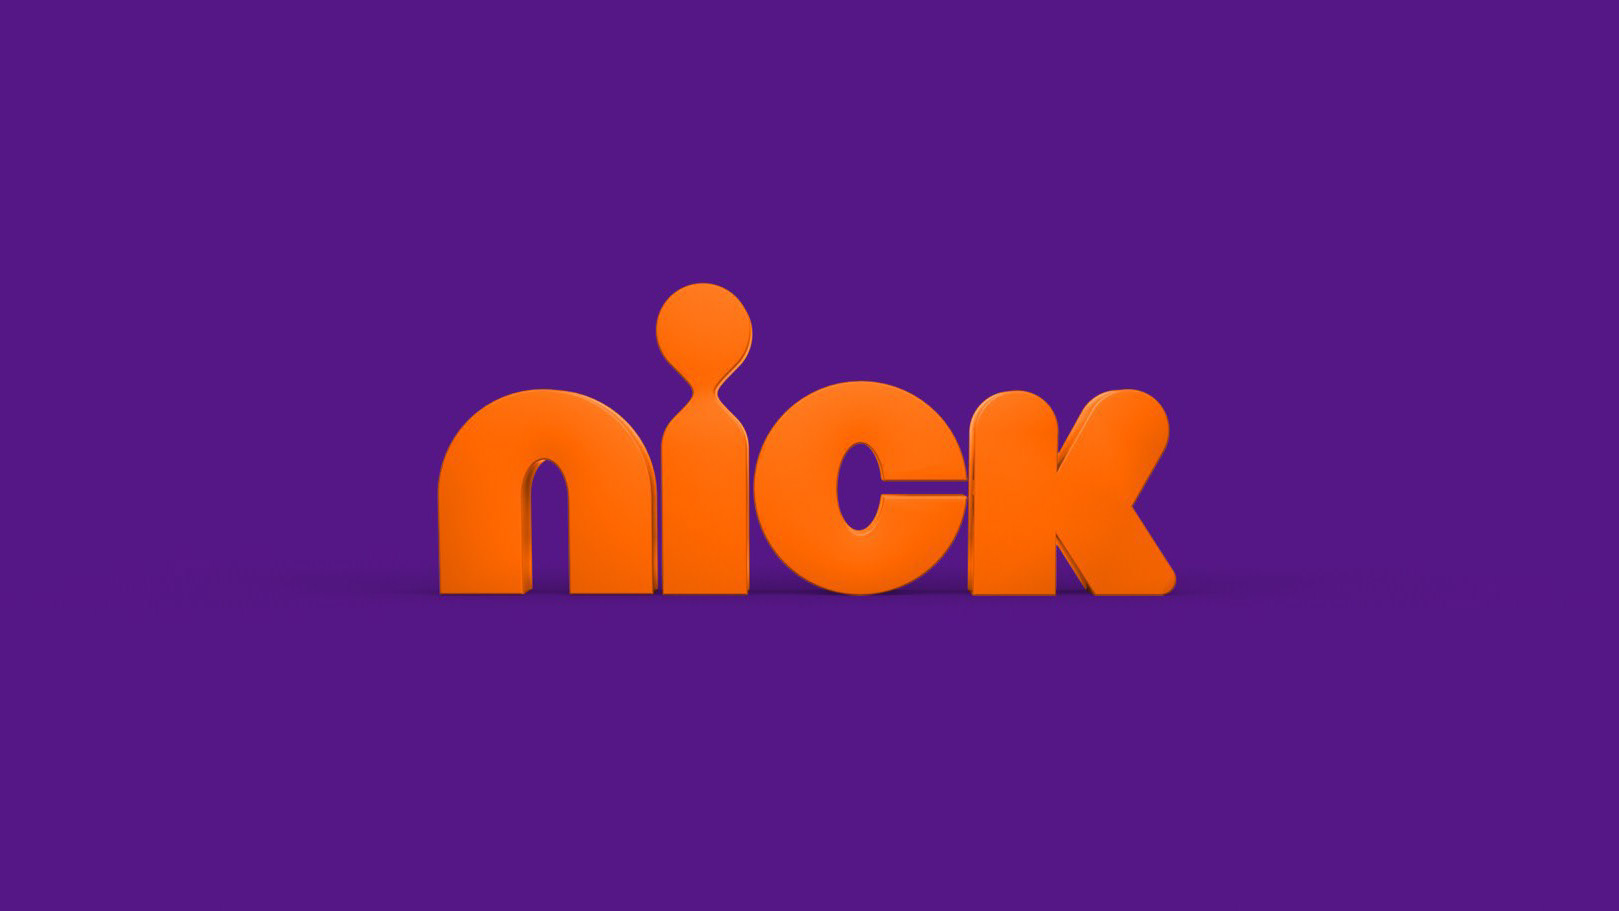 Nick jr прямой эфир. Никелодеон. Канал Nickelodeon. Телеканал Никелодеон. Никелодеон логотип.